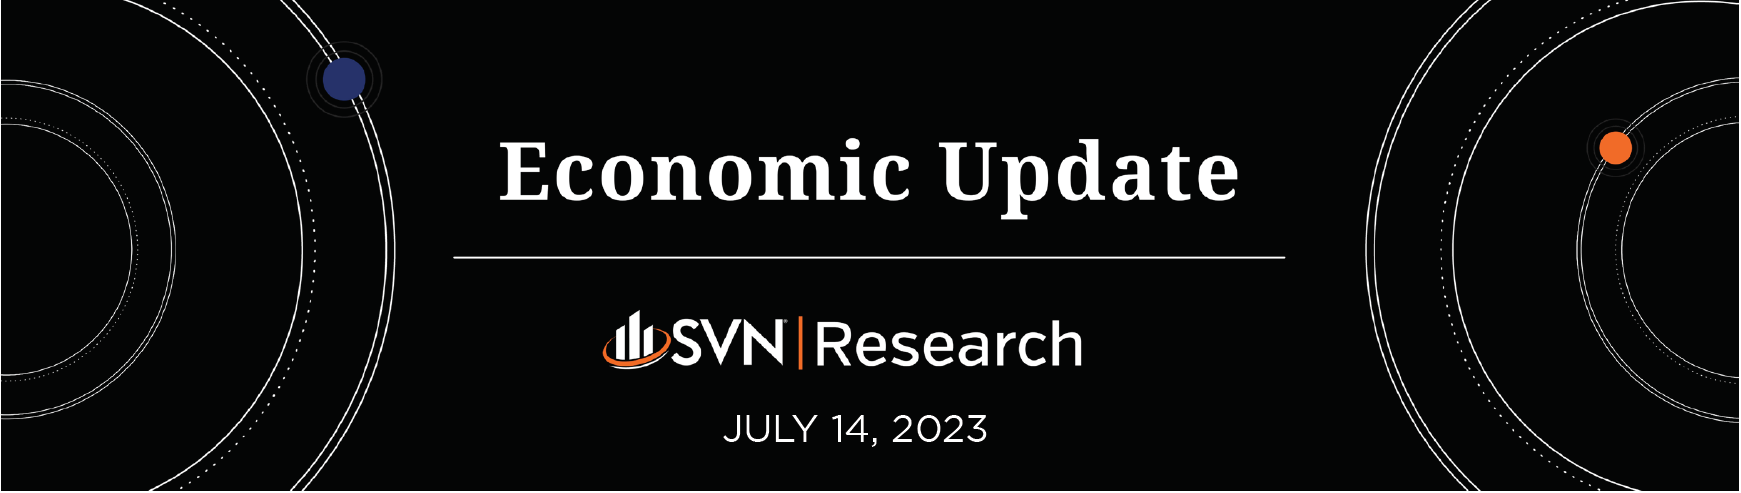 SVN | Research Economic Update 7.14.2023